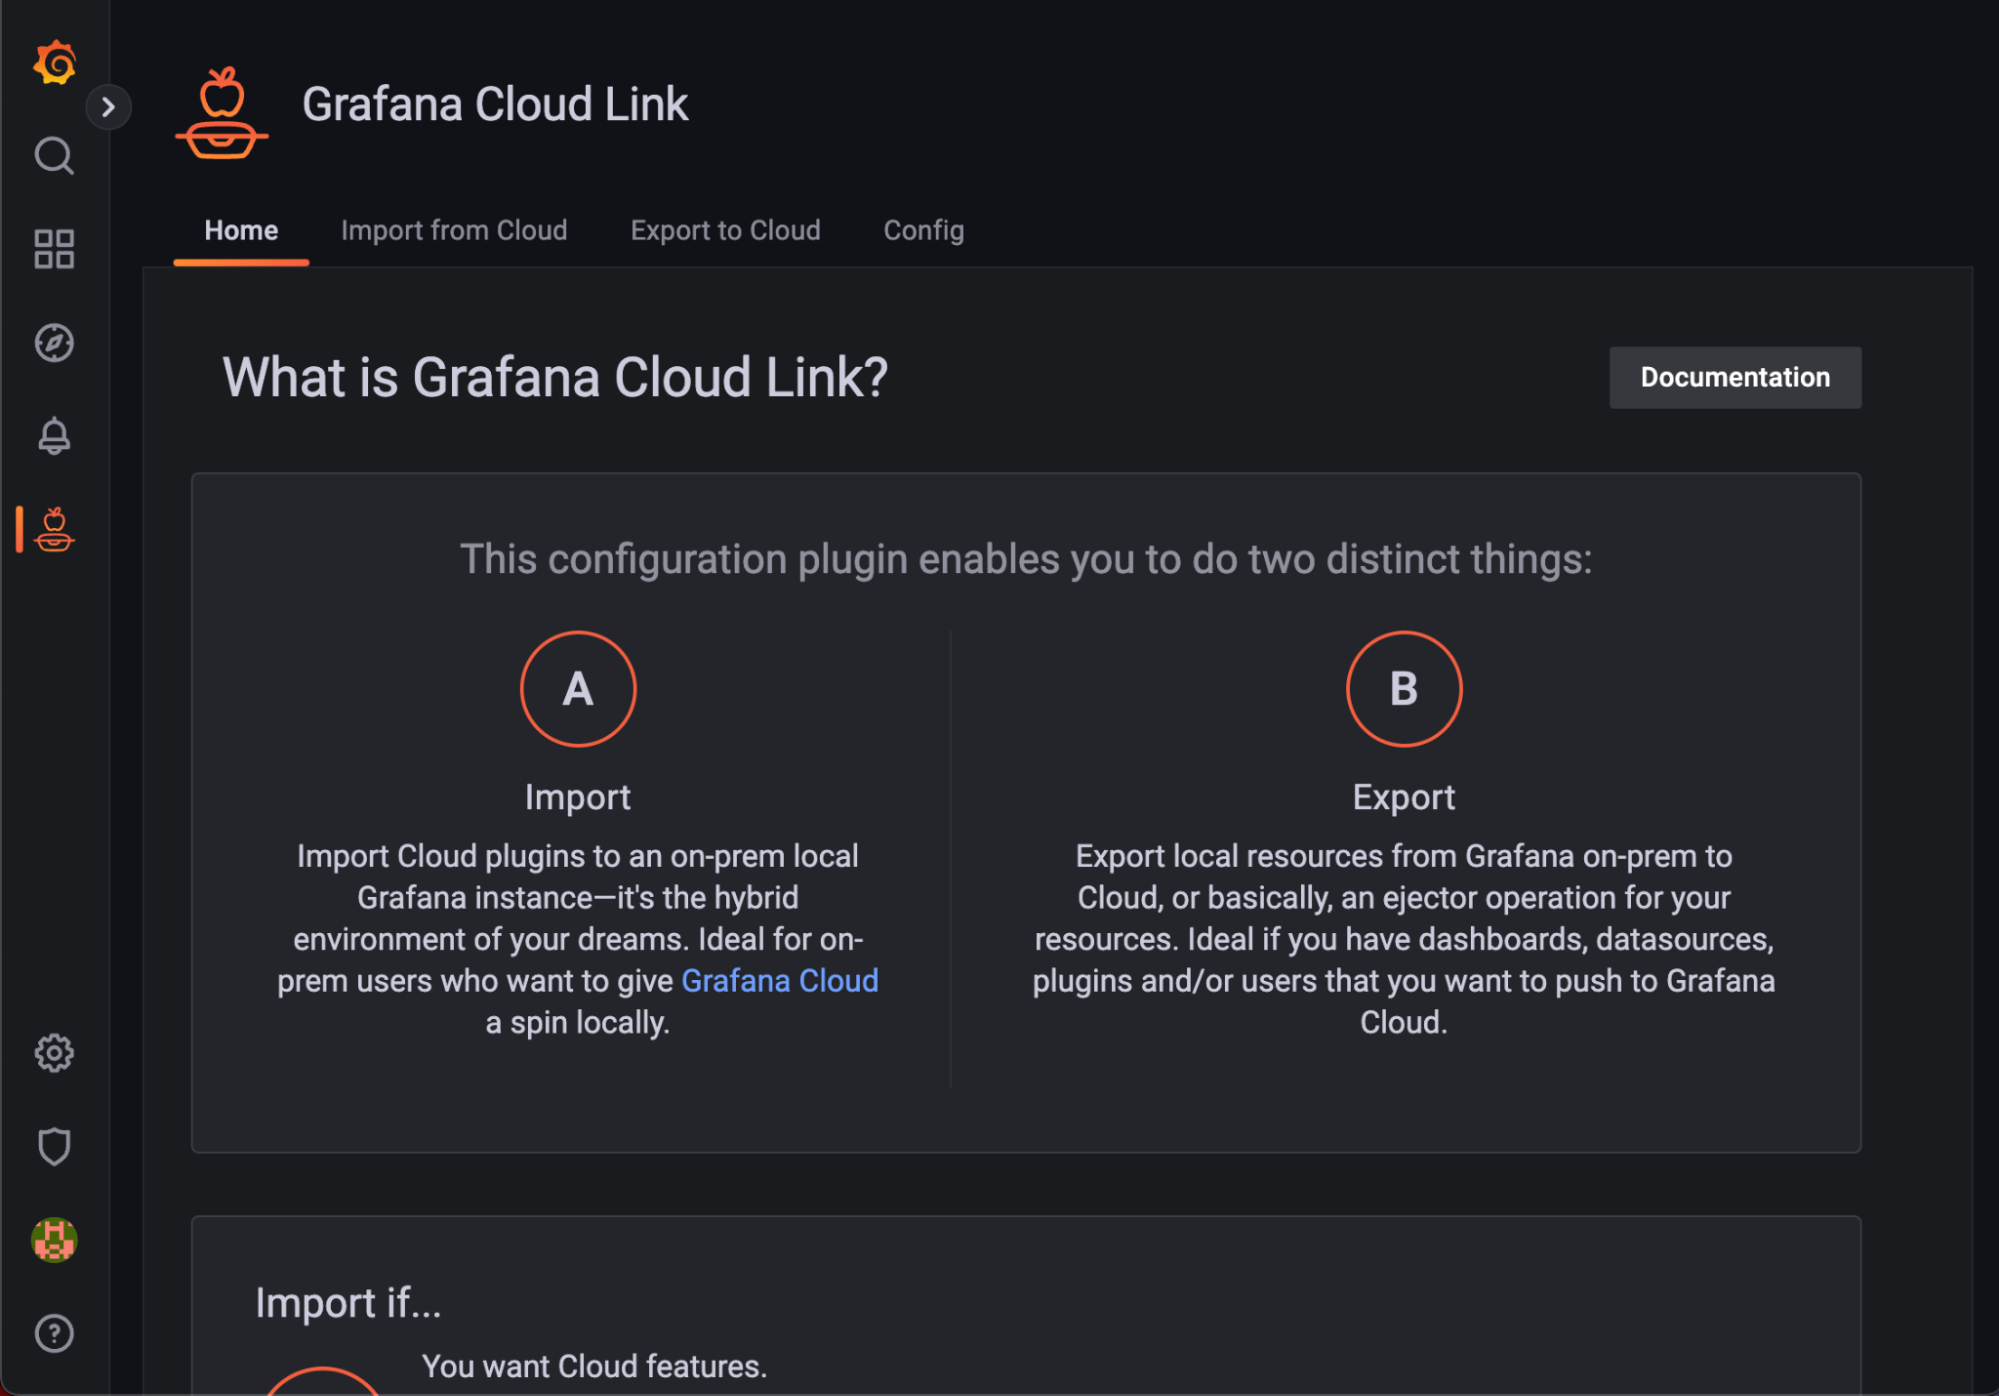 Screenshot of Grafana Cloud Link homepage